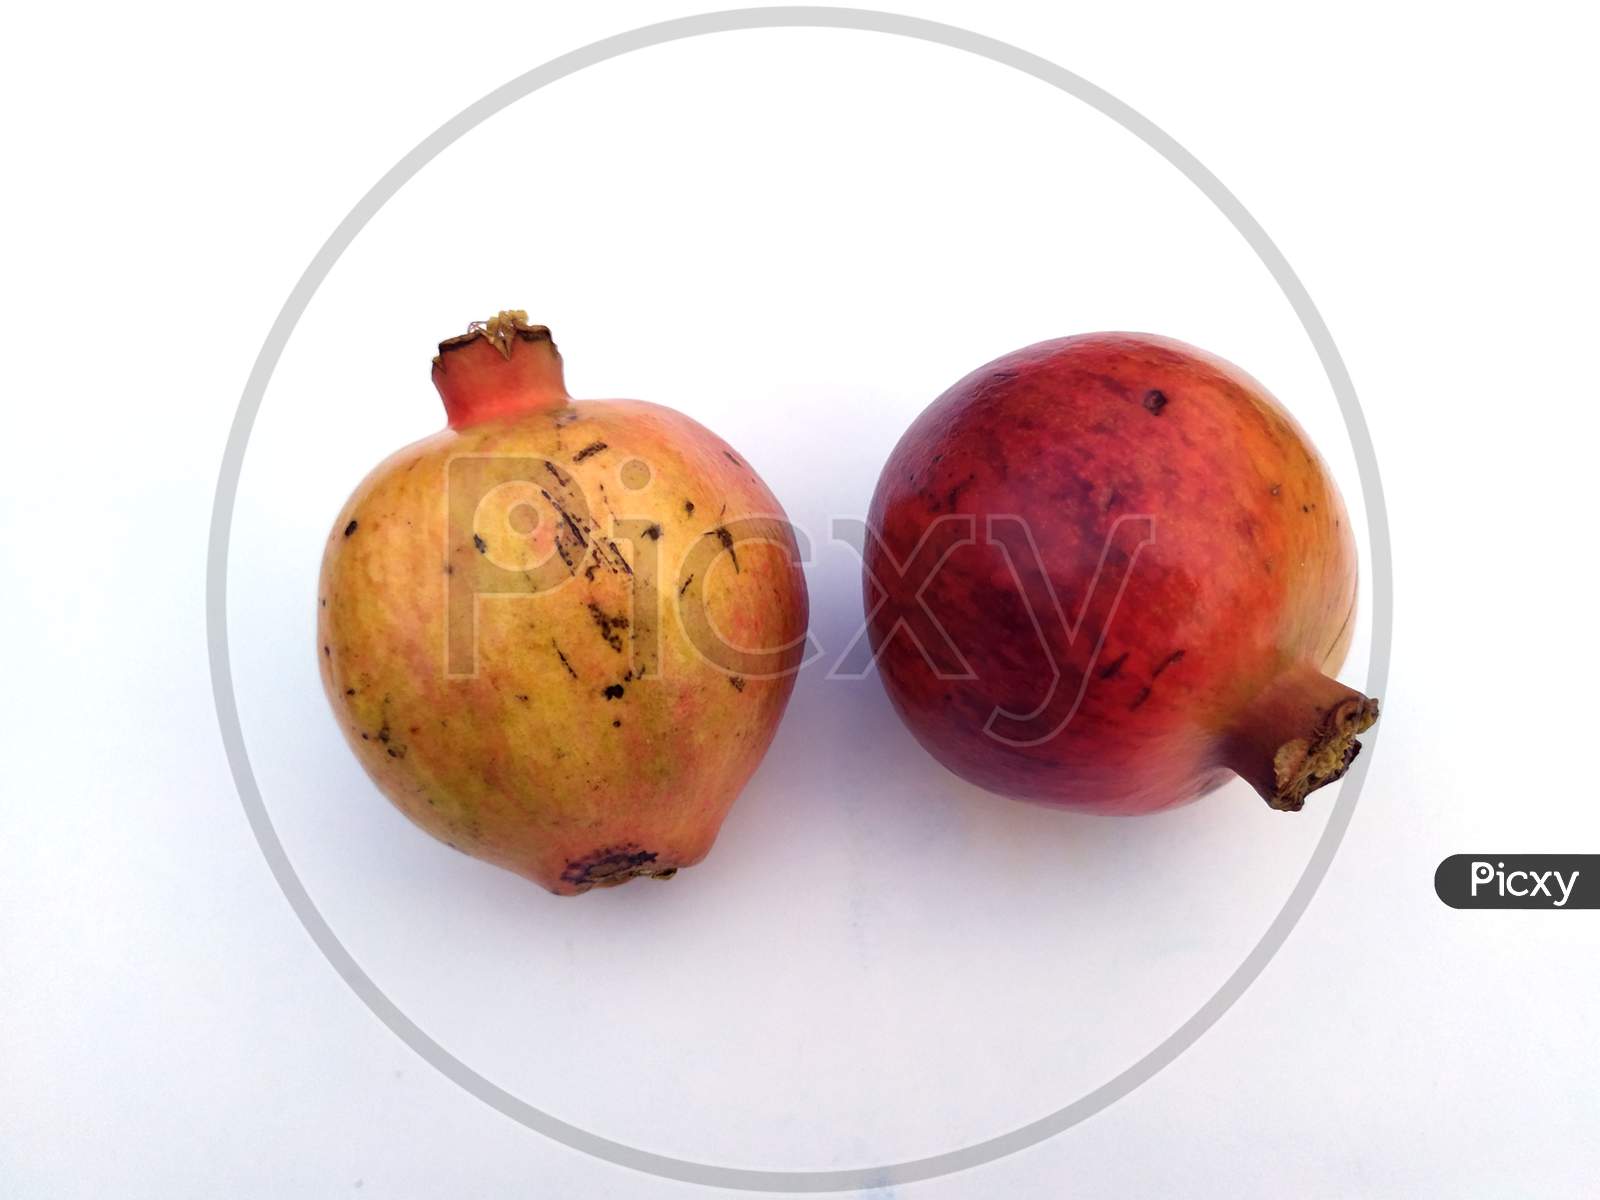 fresh healthy sweet pomegranate isolated on white background